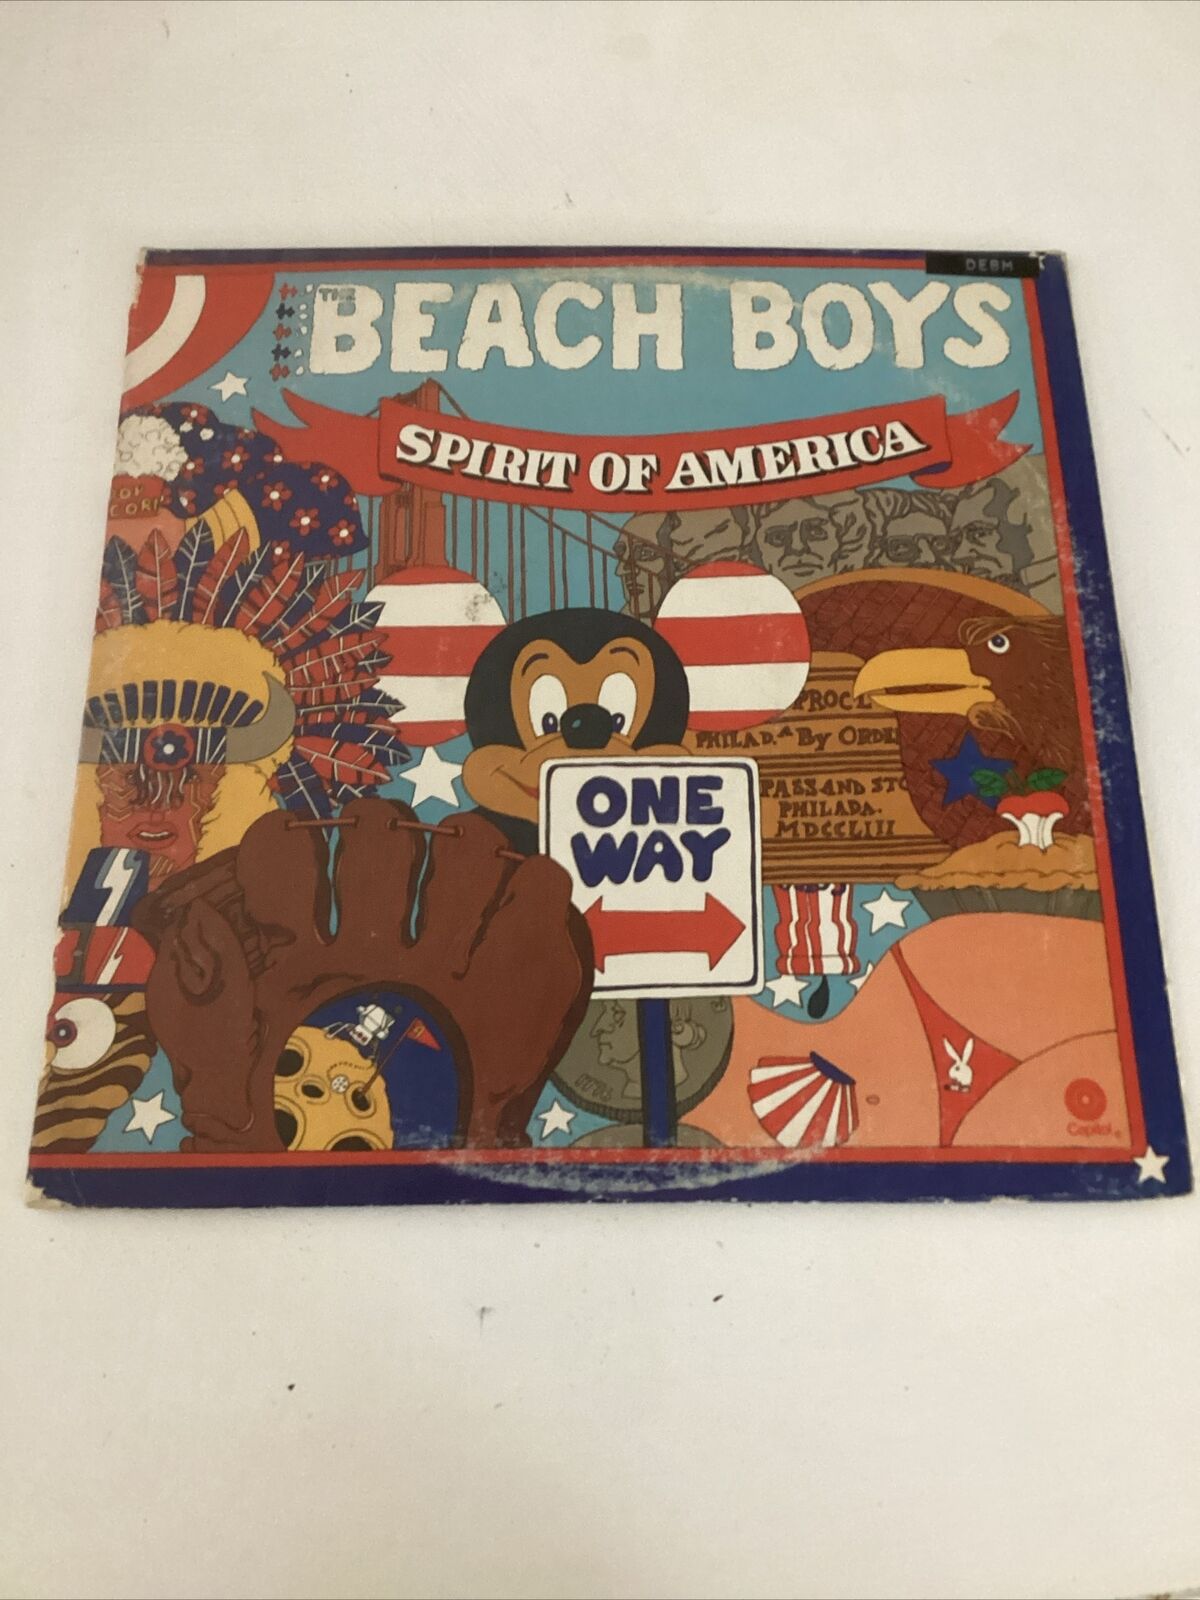 vinyl LP The Beach Boys Spirit of America 1975 Capitol records